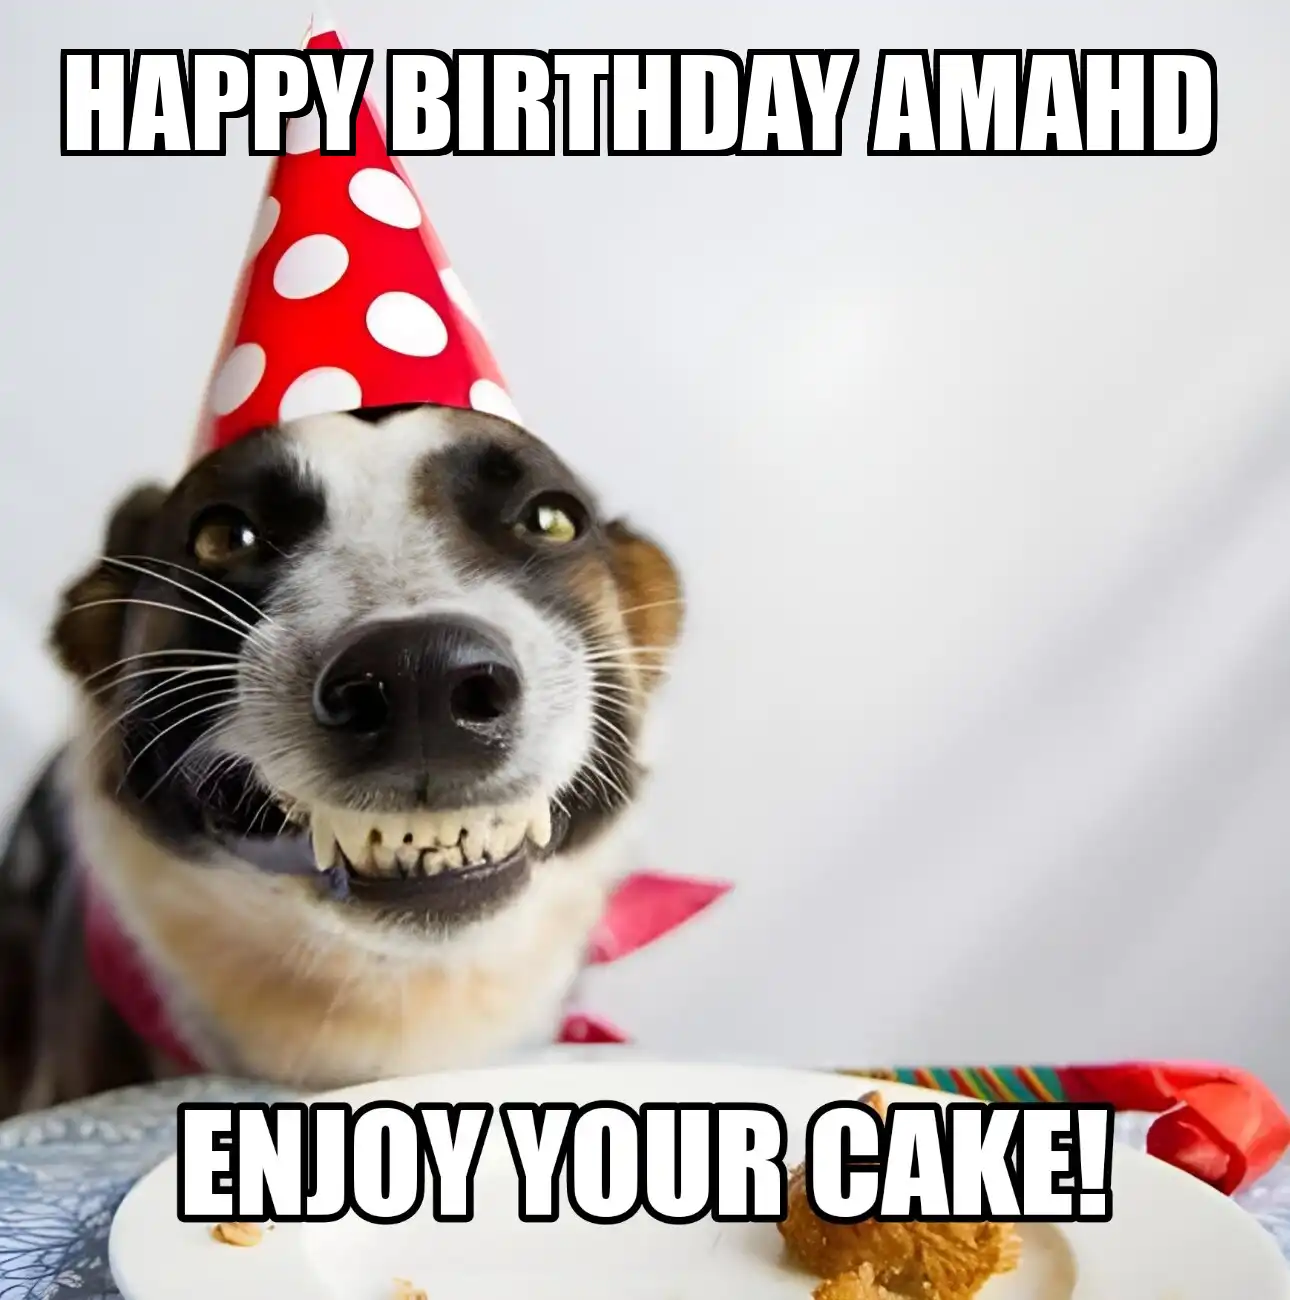 Happy Birthday Amahd Enjoy Your Cake Dog Meme